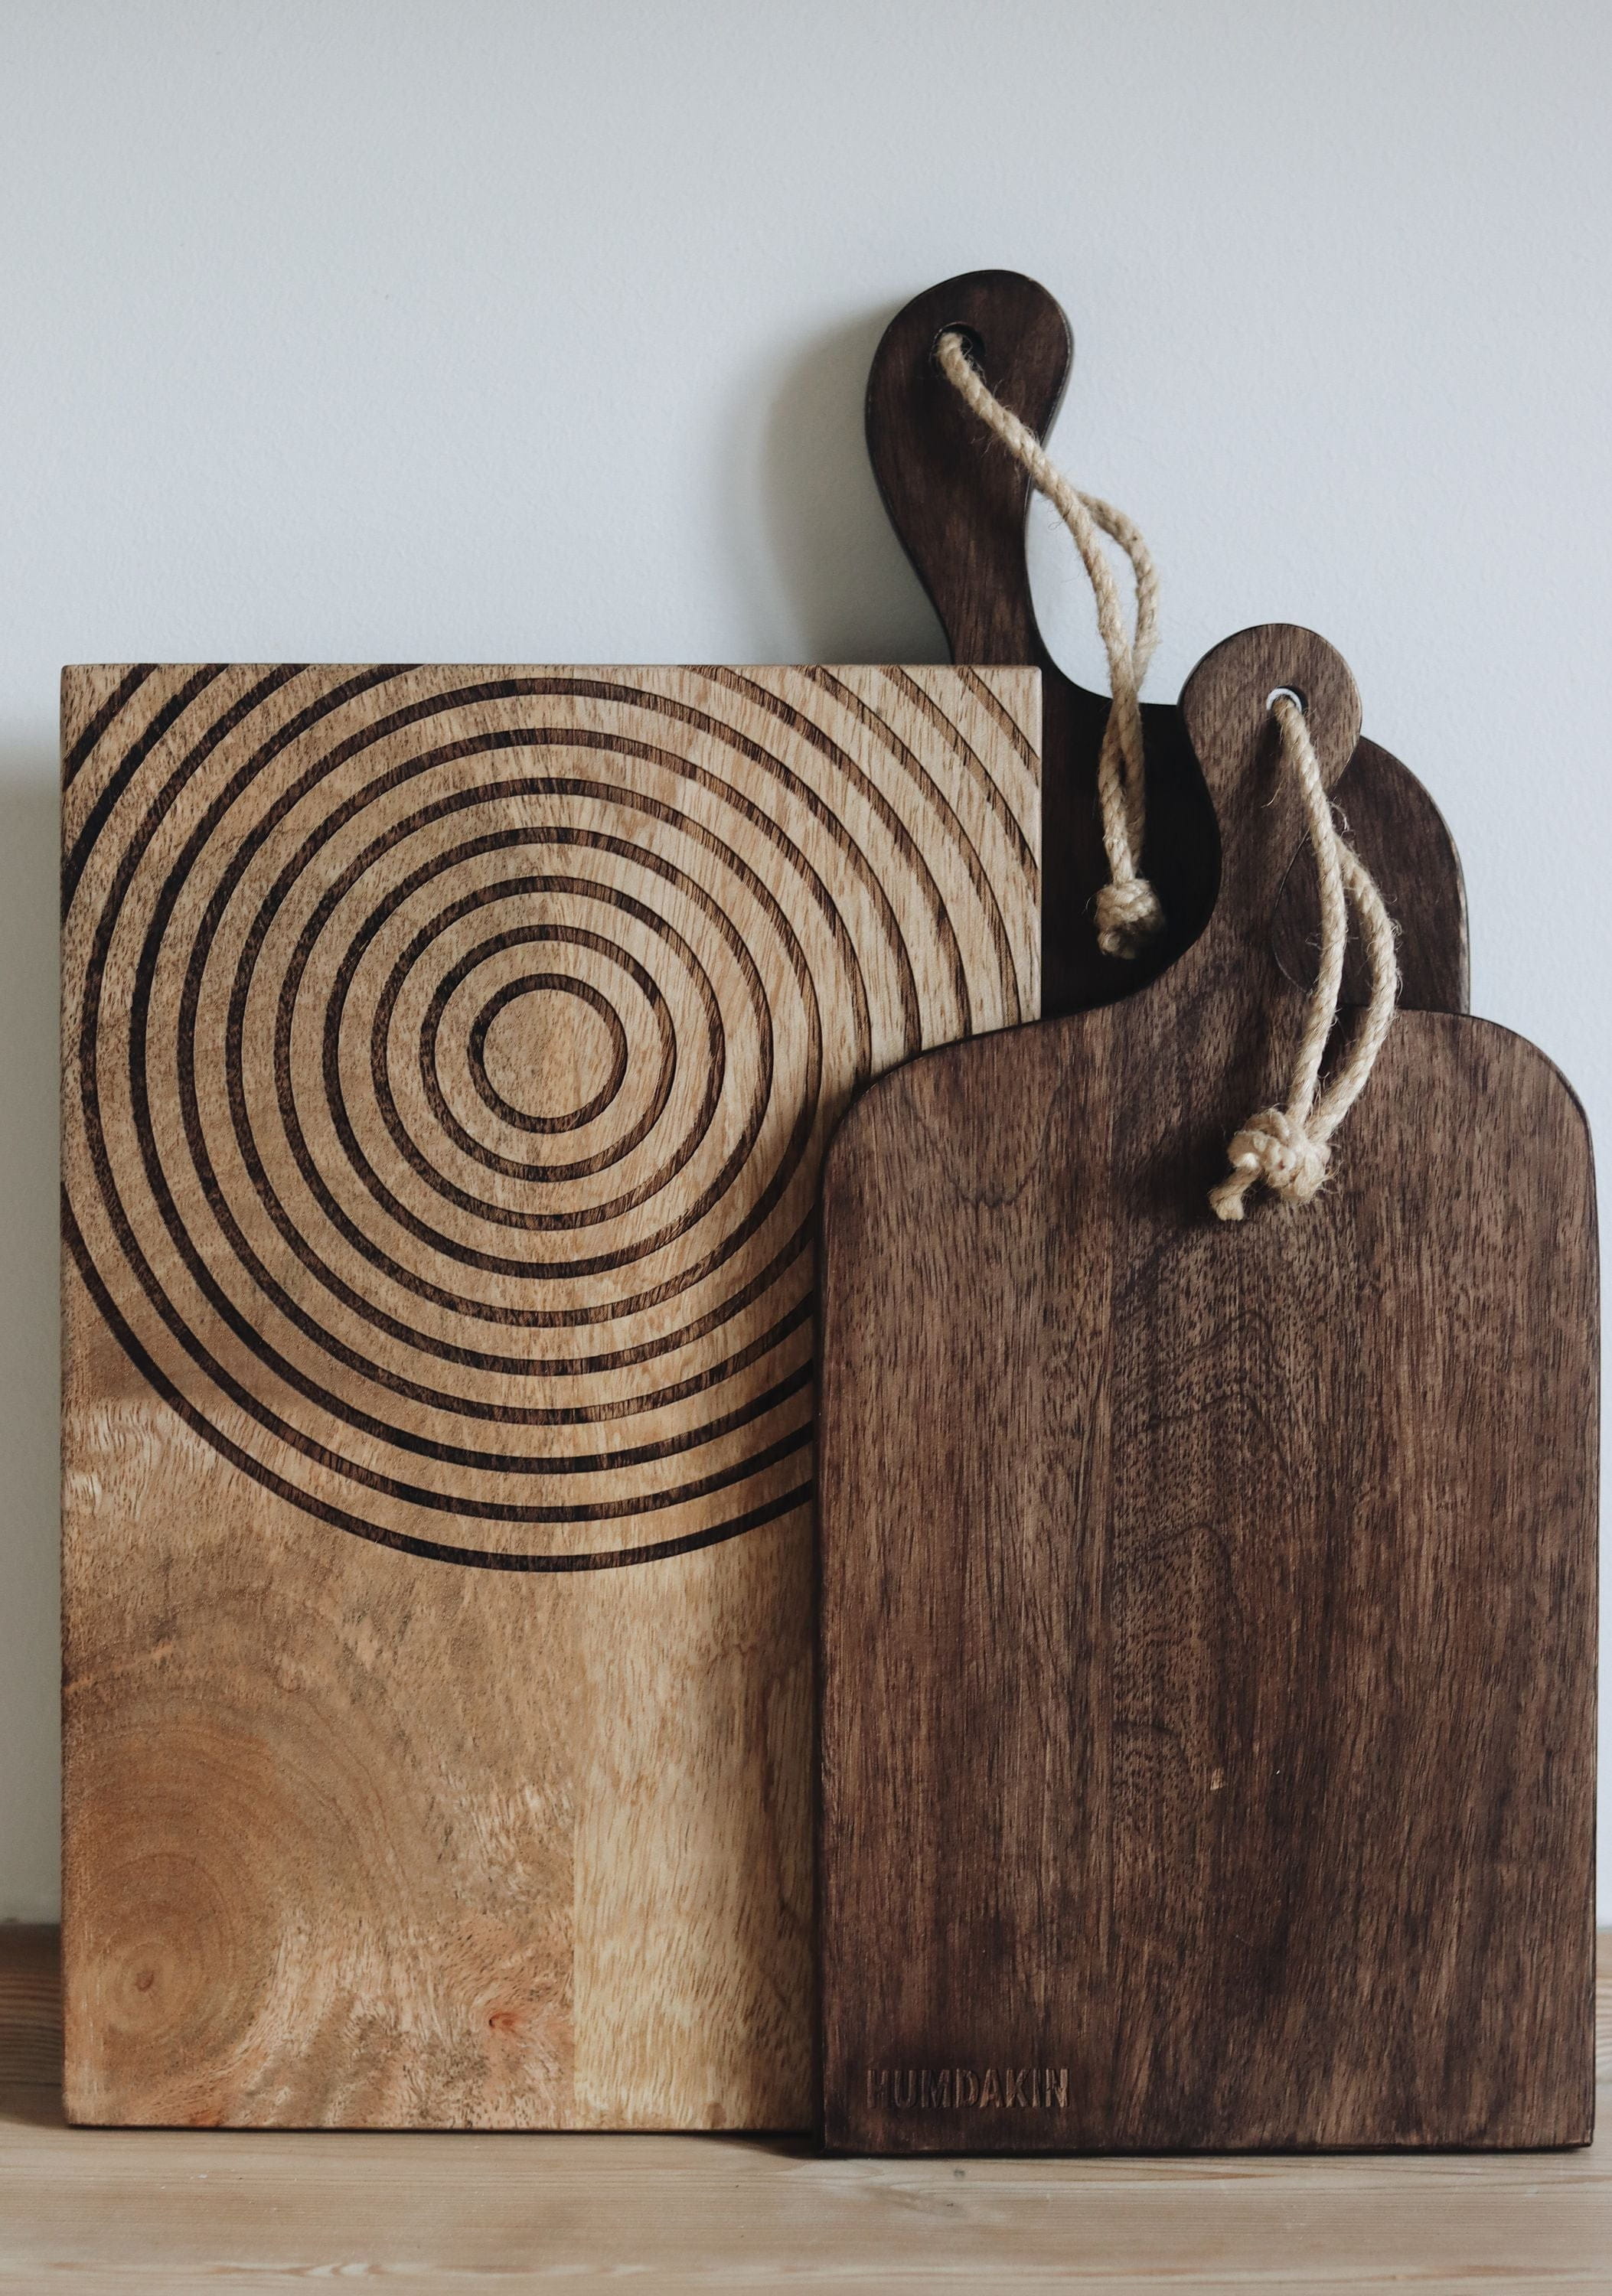 Humdakin Serving Board Made Of Mango Wood, Small